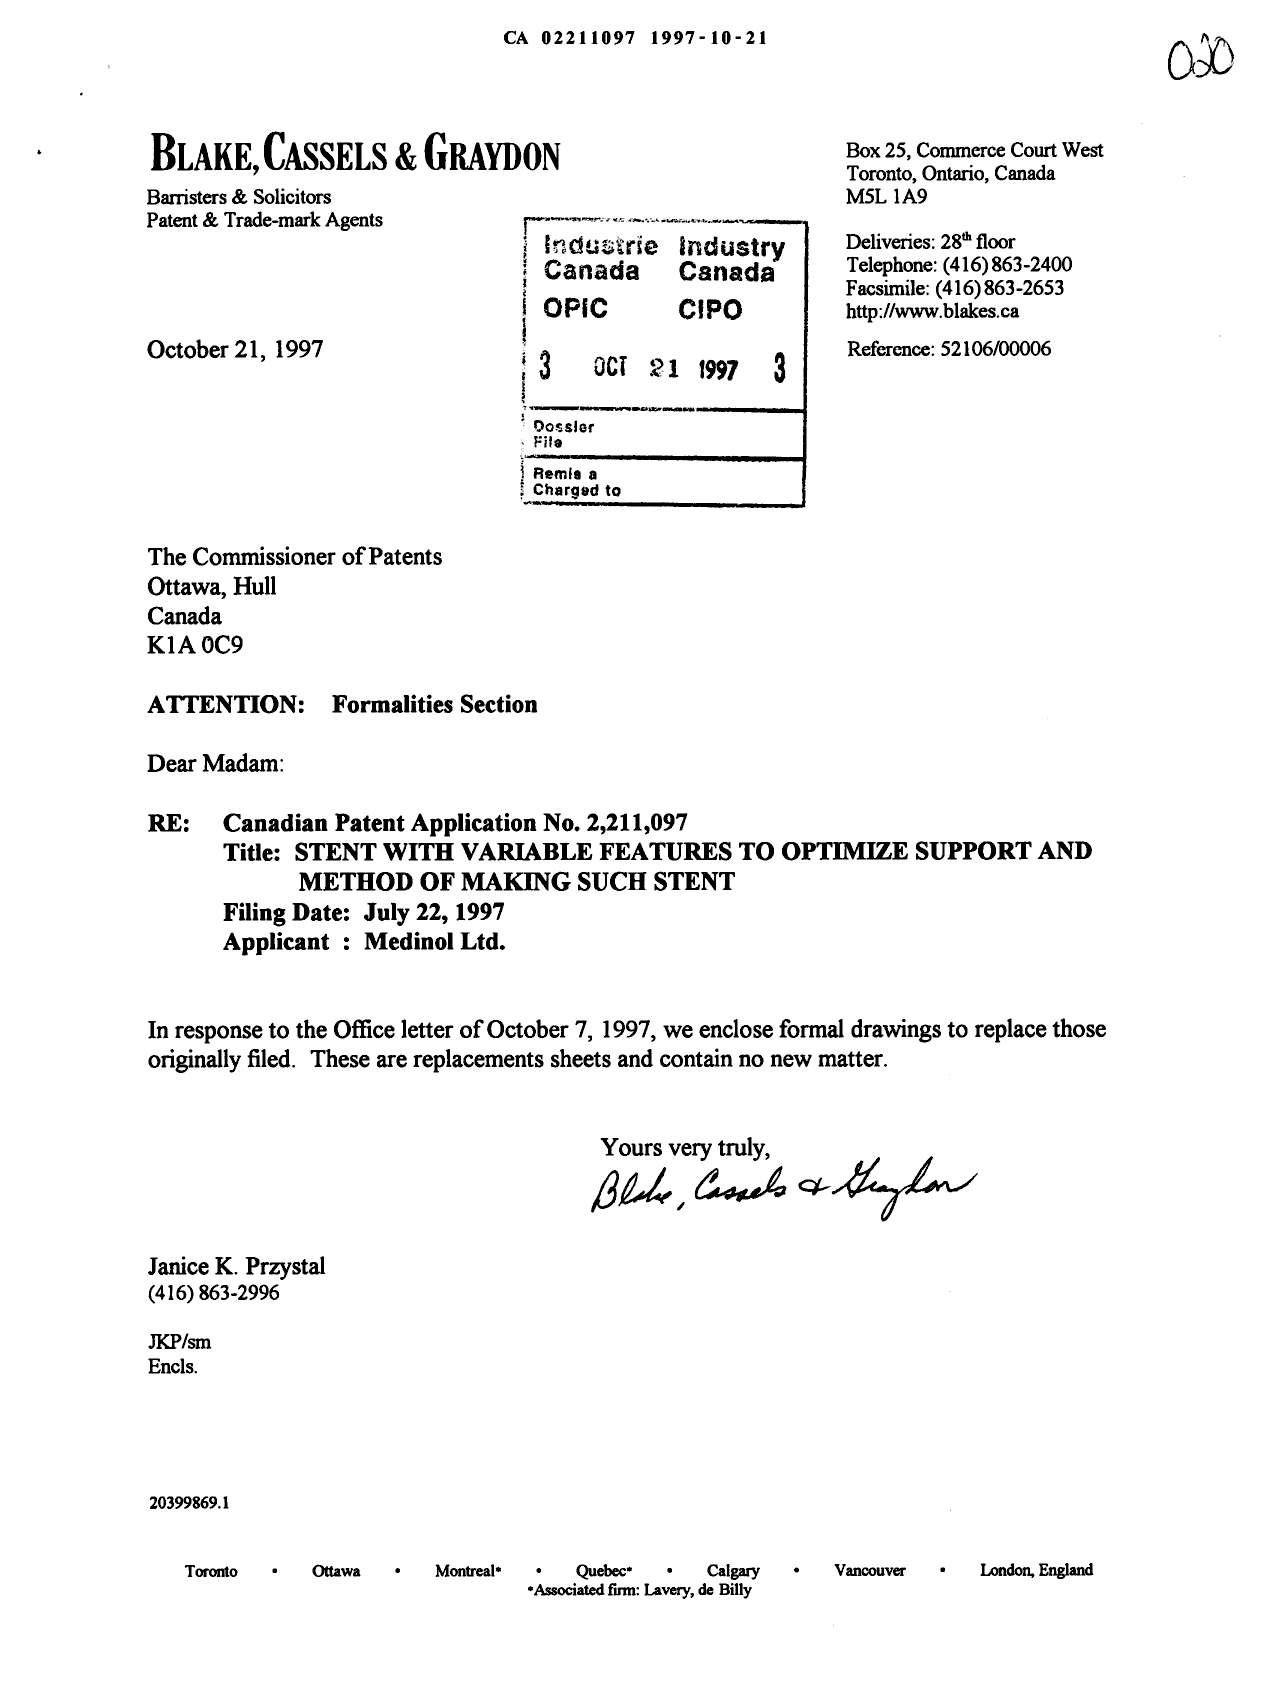 Canadian Patent Document 2211097. Correspondence 19971021. Image 1 of 8